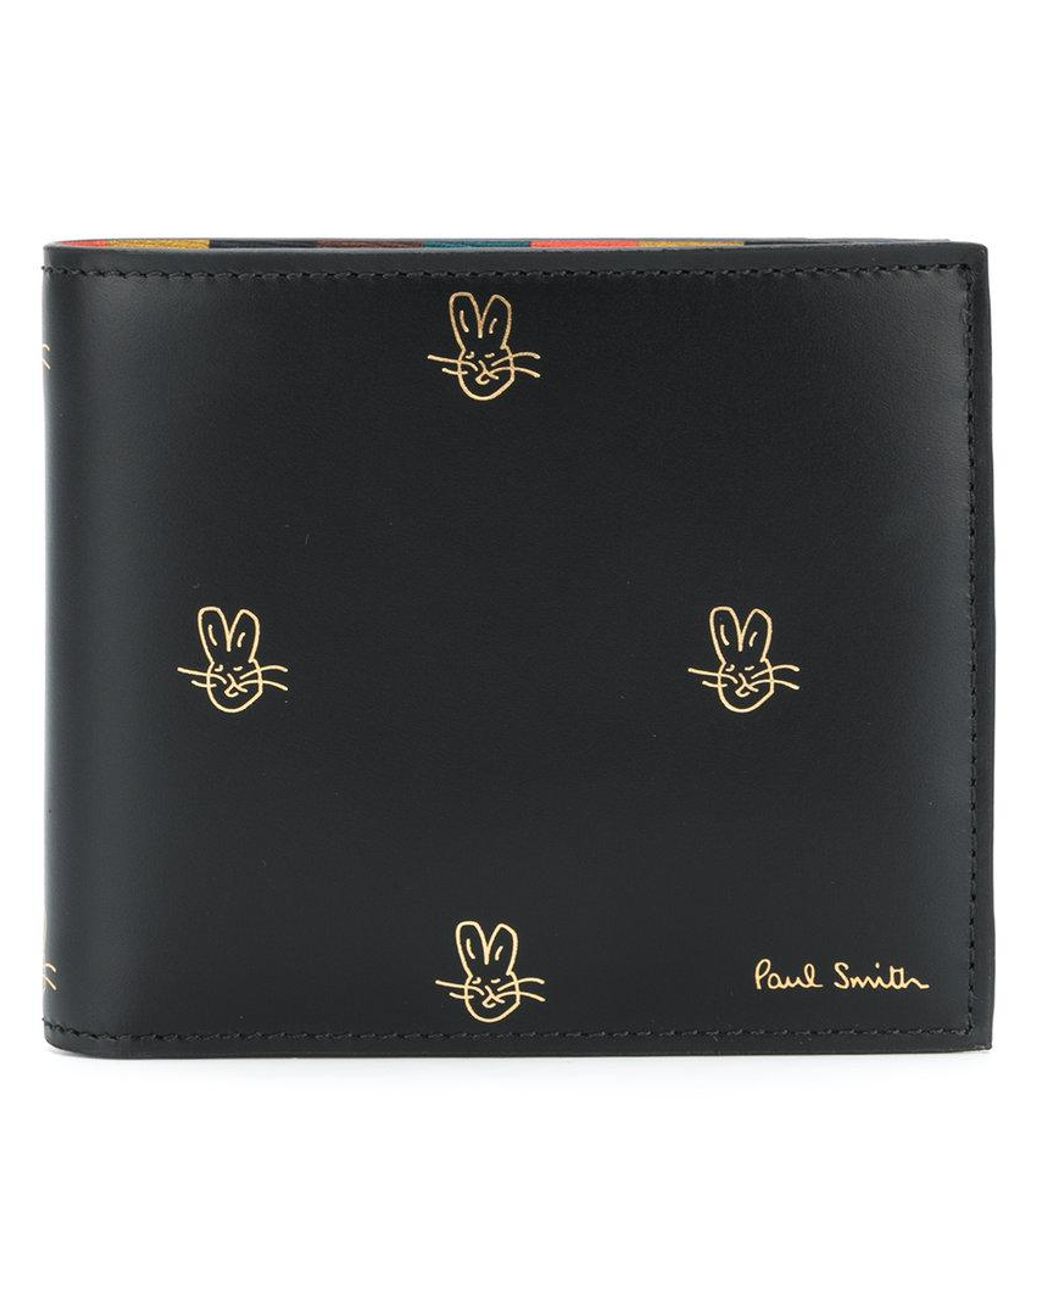 Paul Smith Rabbit Print Bi-fold Wallet in Black for Men | Lyst Australia